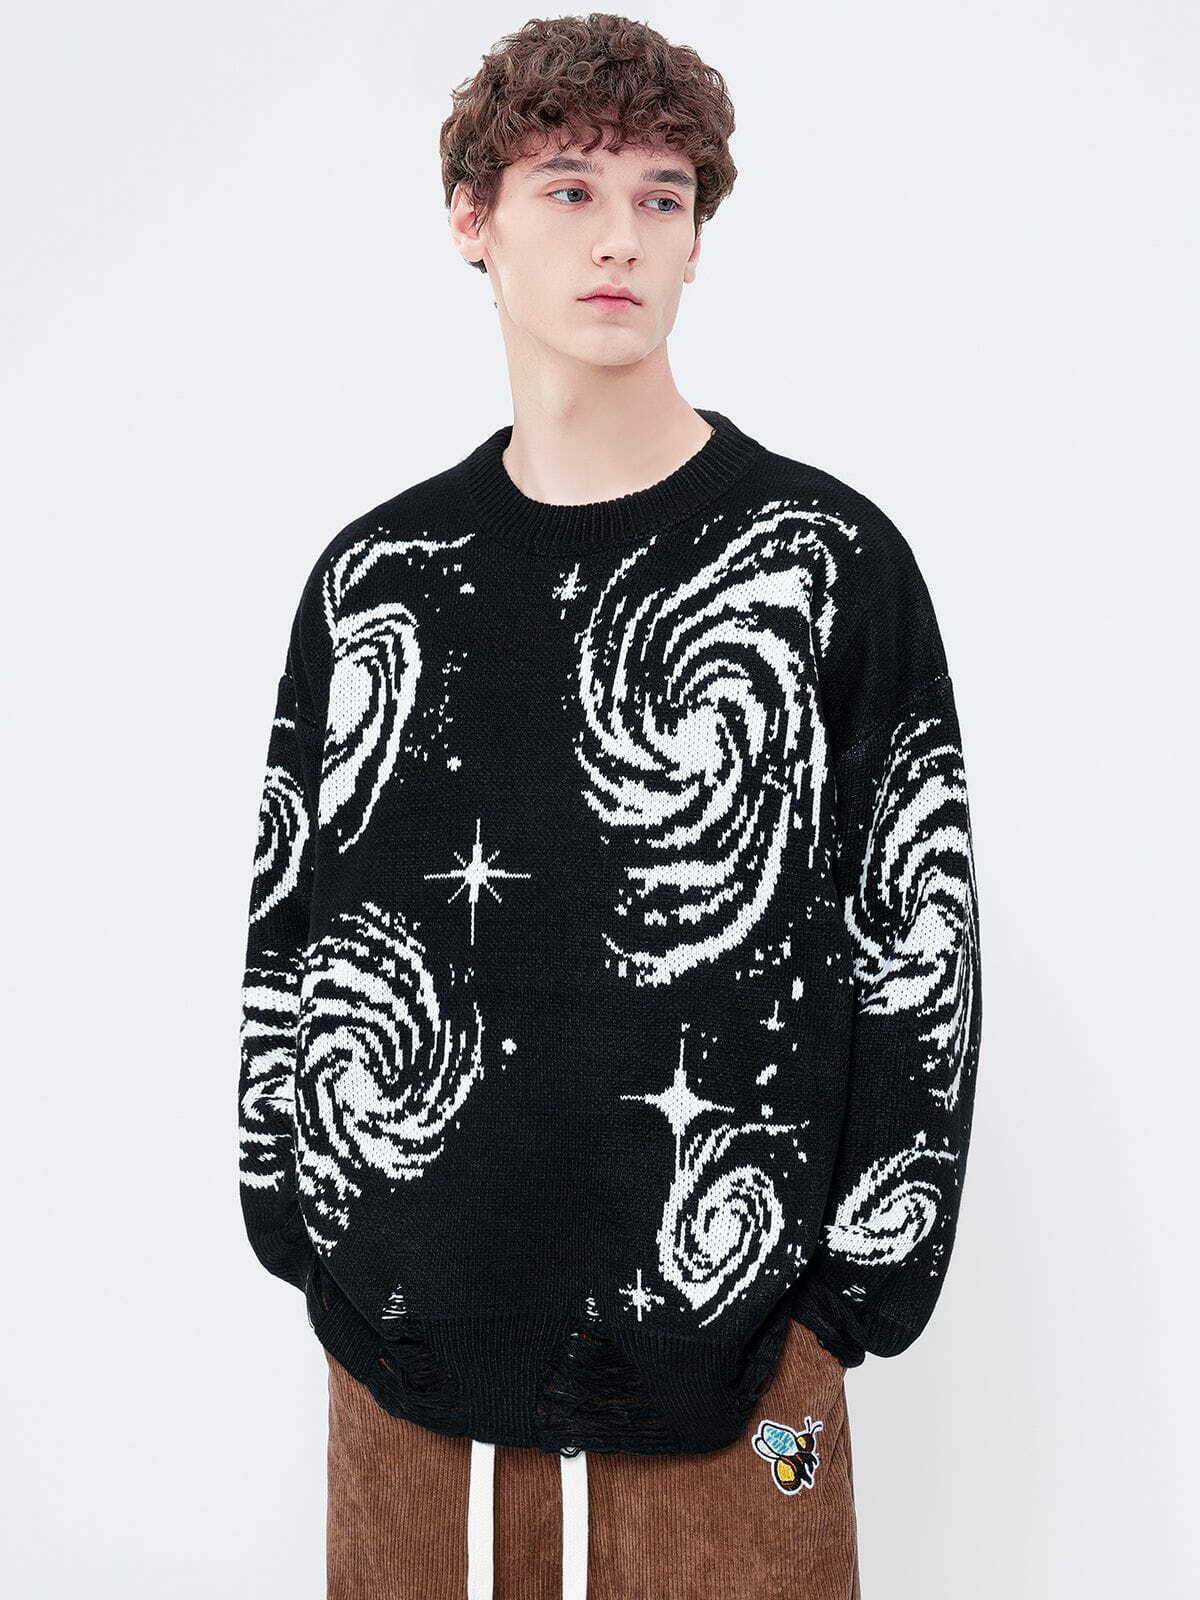 starry night jacquard knit sweater edgy urban streetwear chic 1559